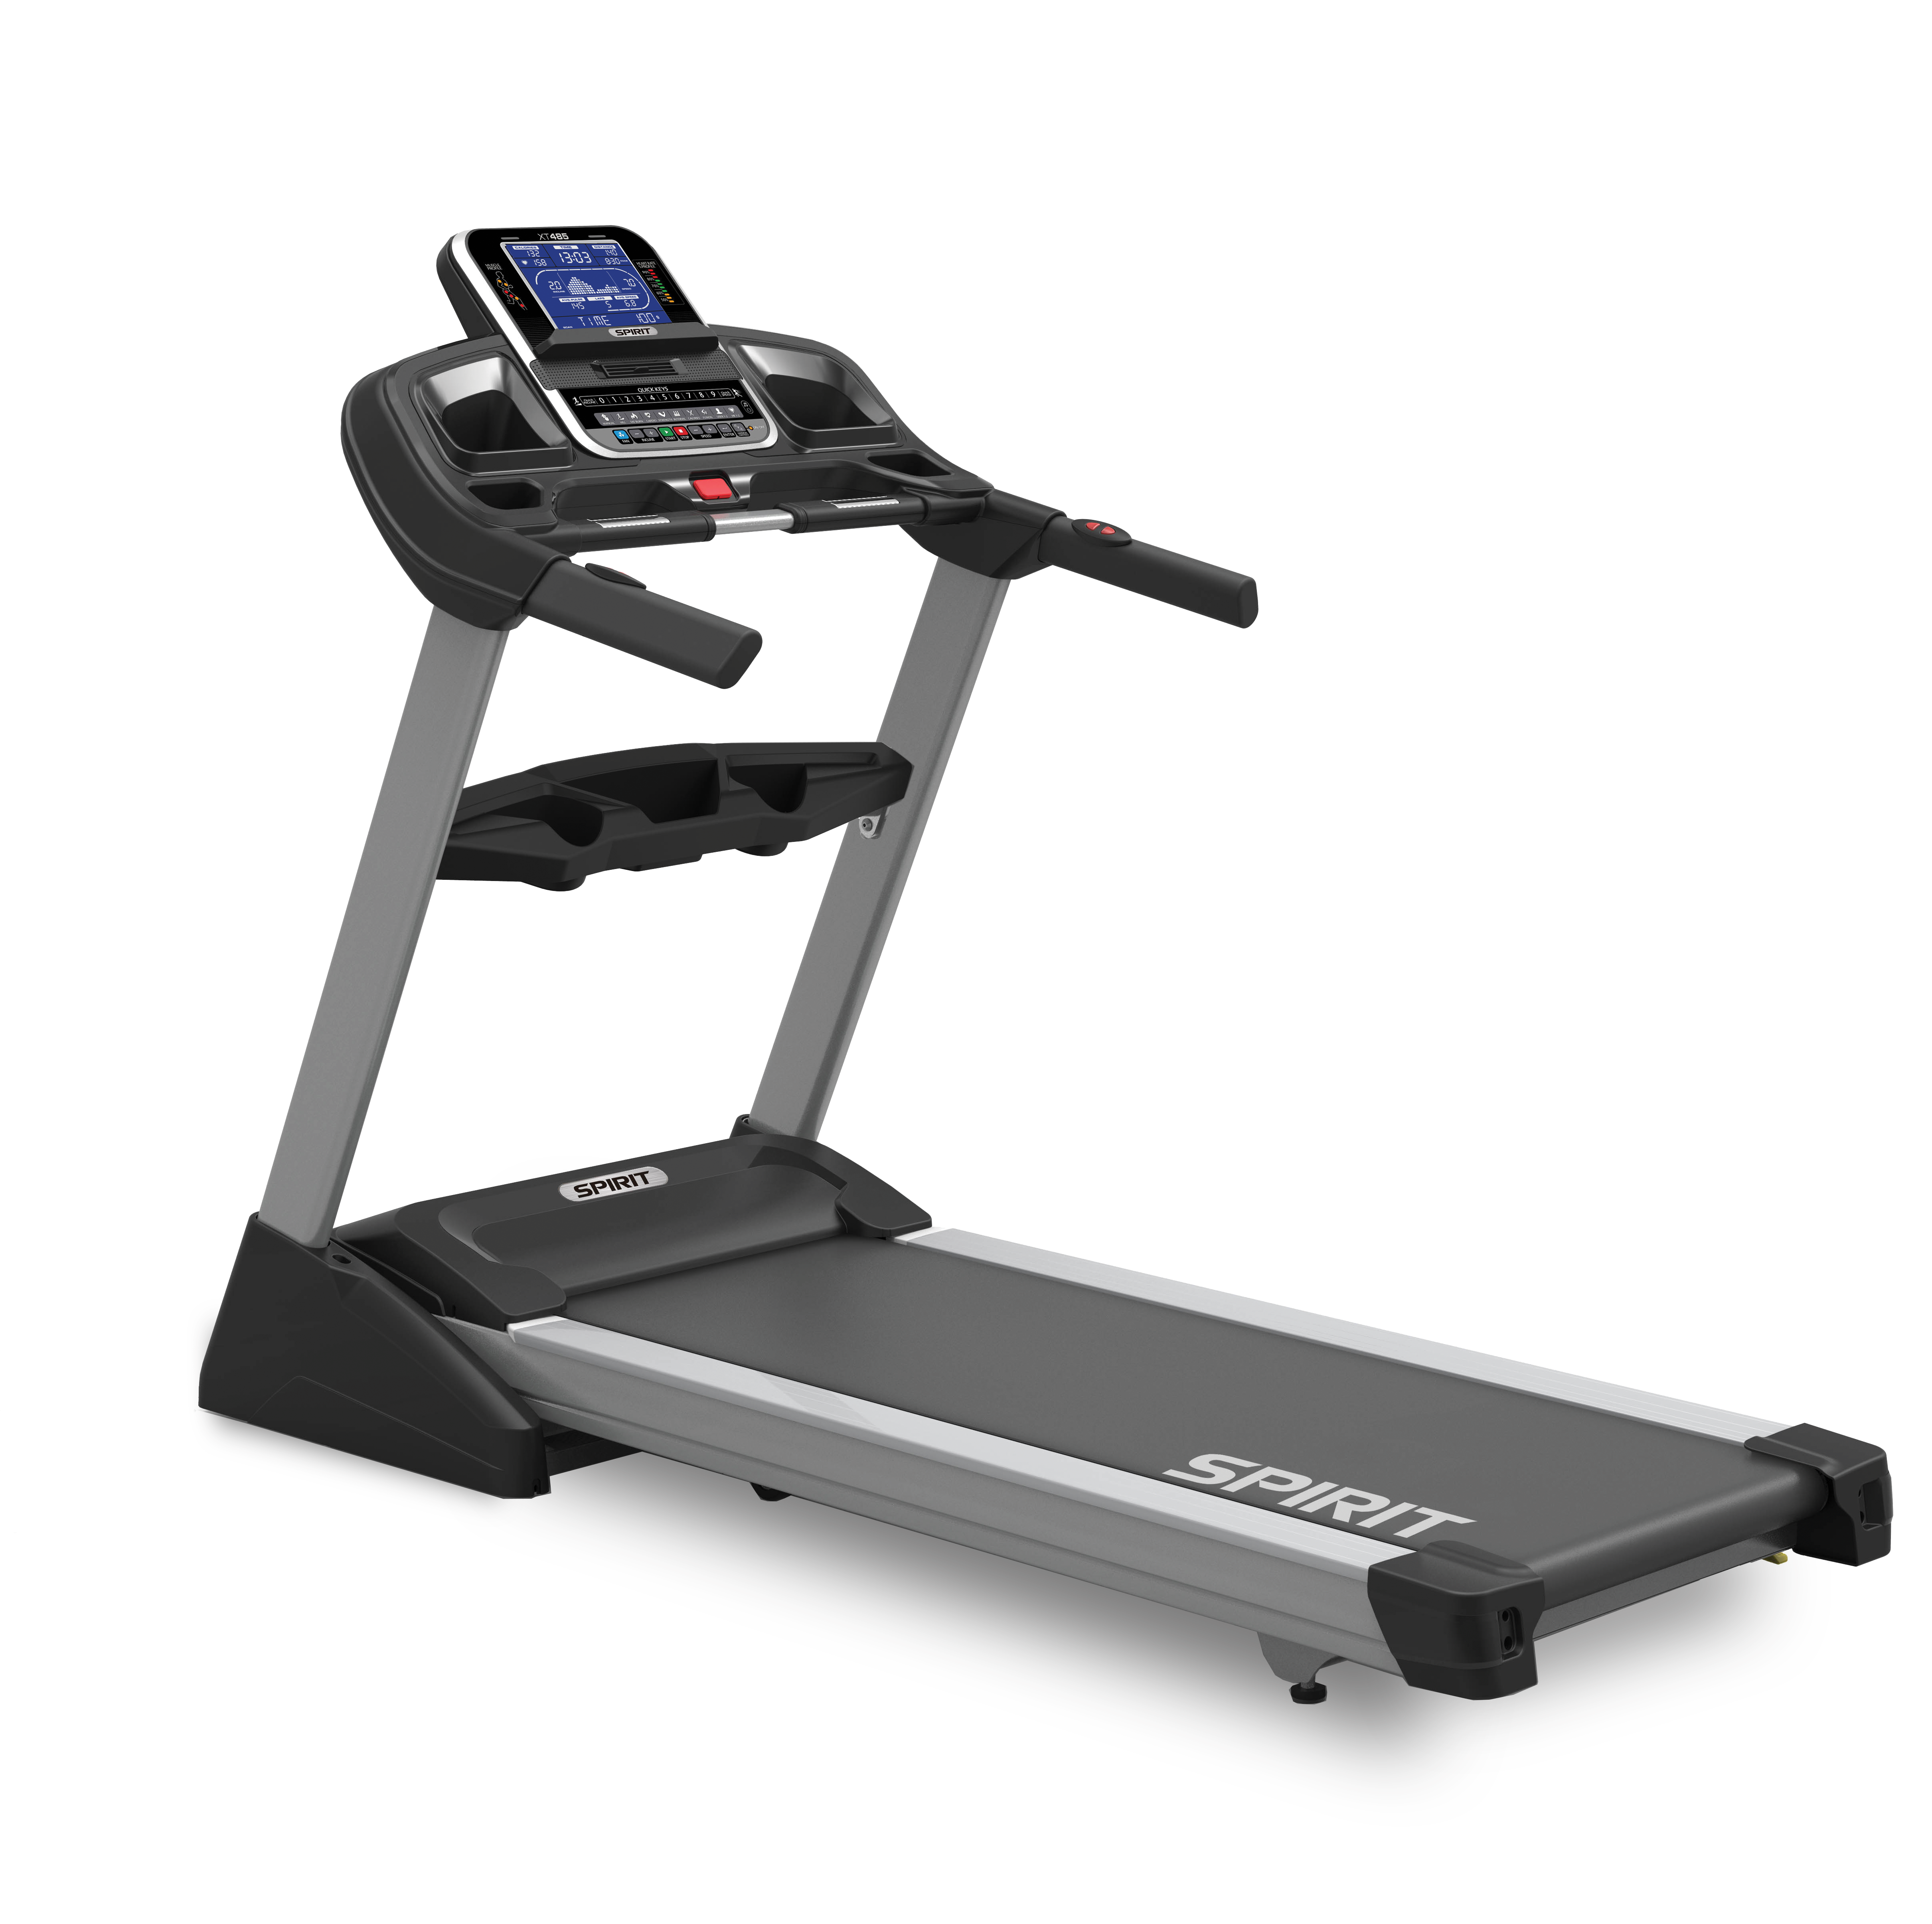 Spirit 30516 treadmill manual pdf